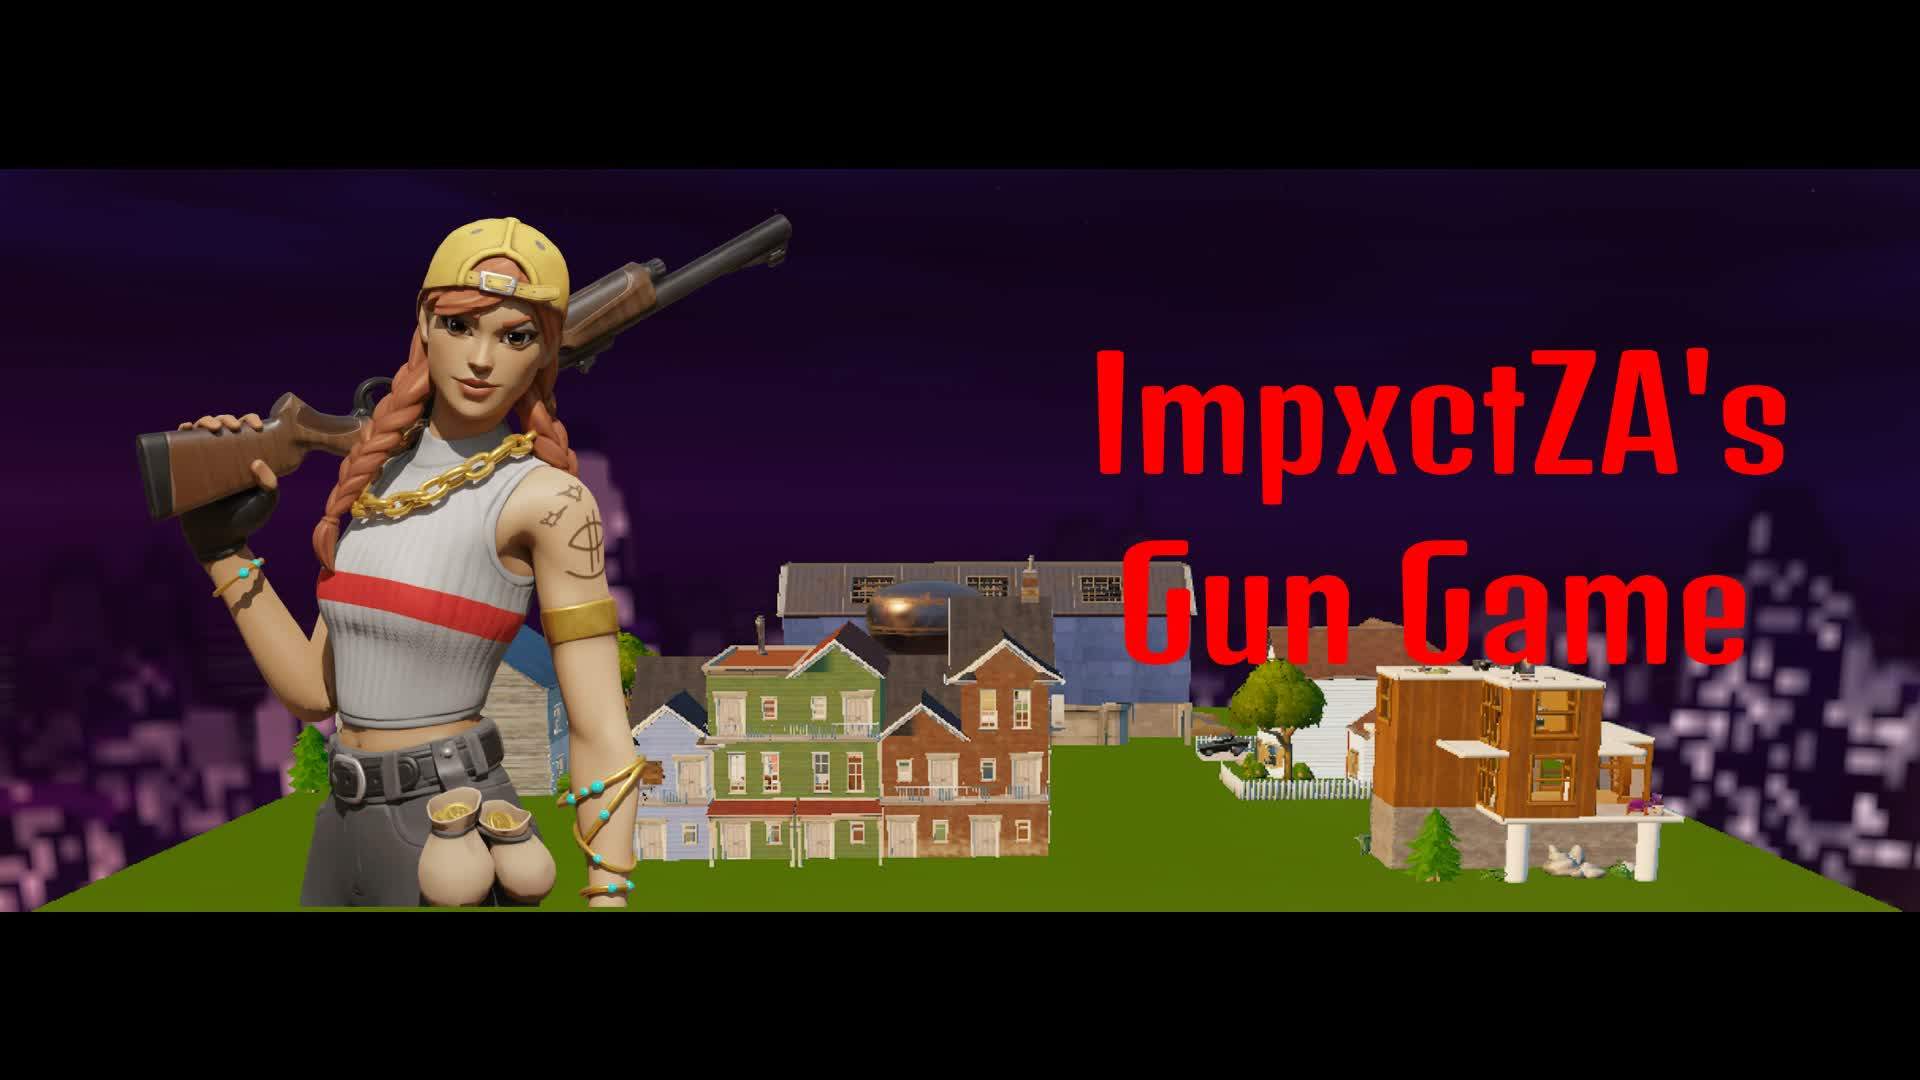 ImpxctZA's Gun Game